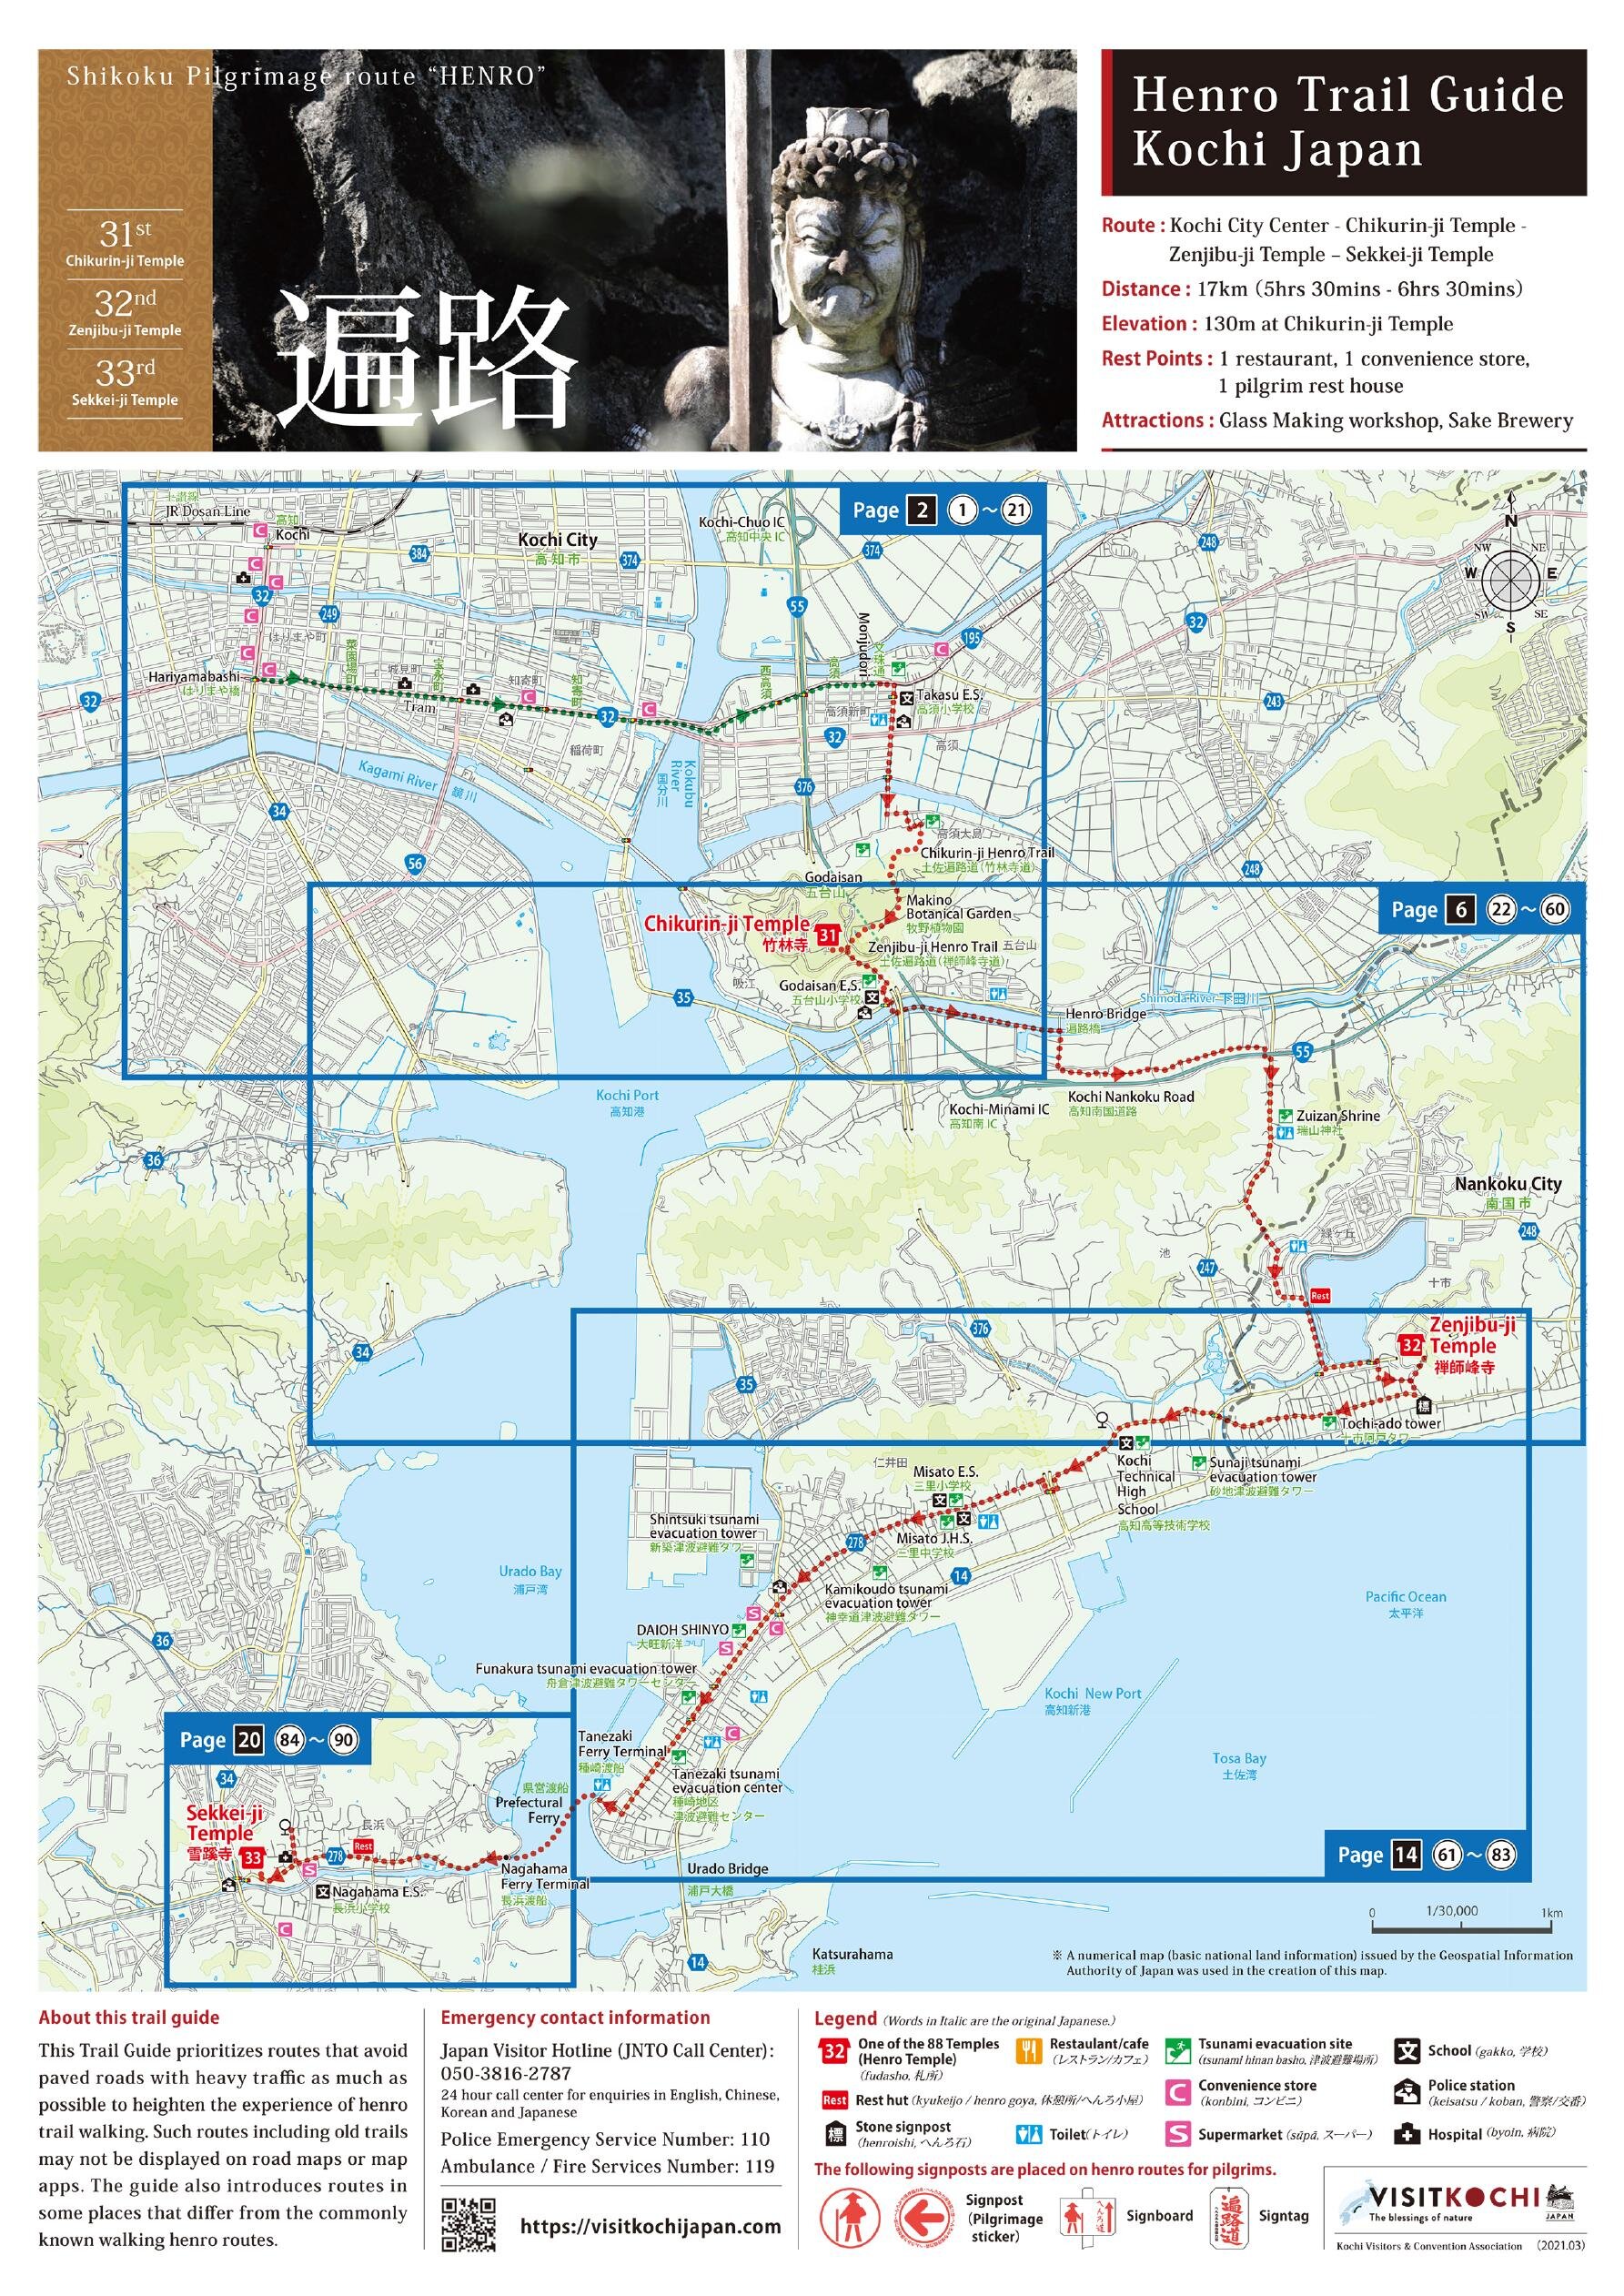 Henro-Trail-Guide-Kochi-Japan_31-33